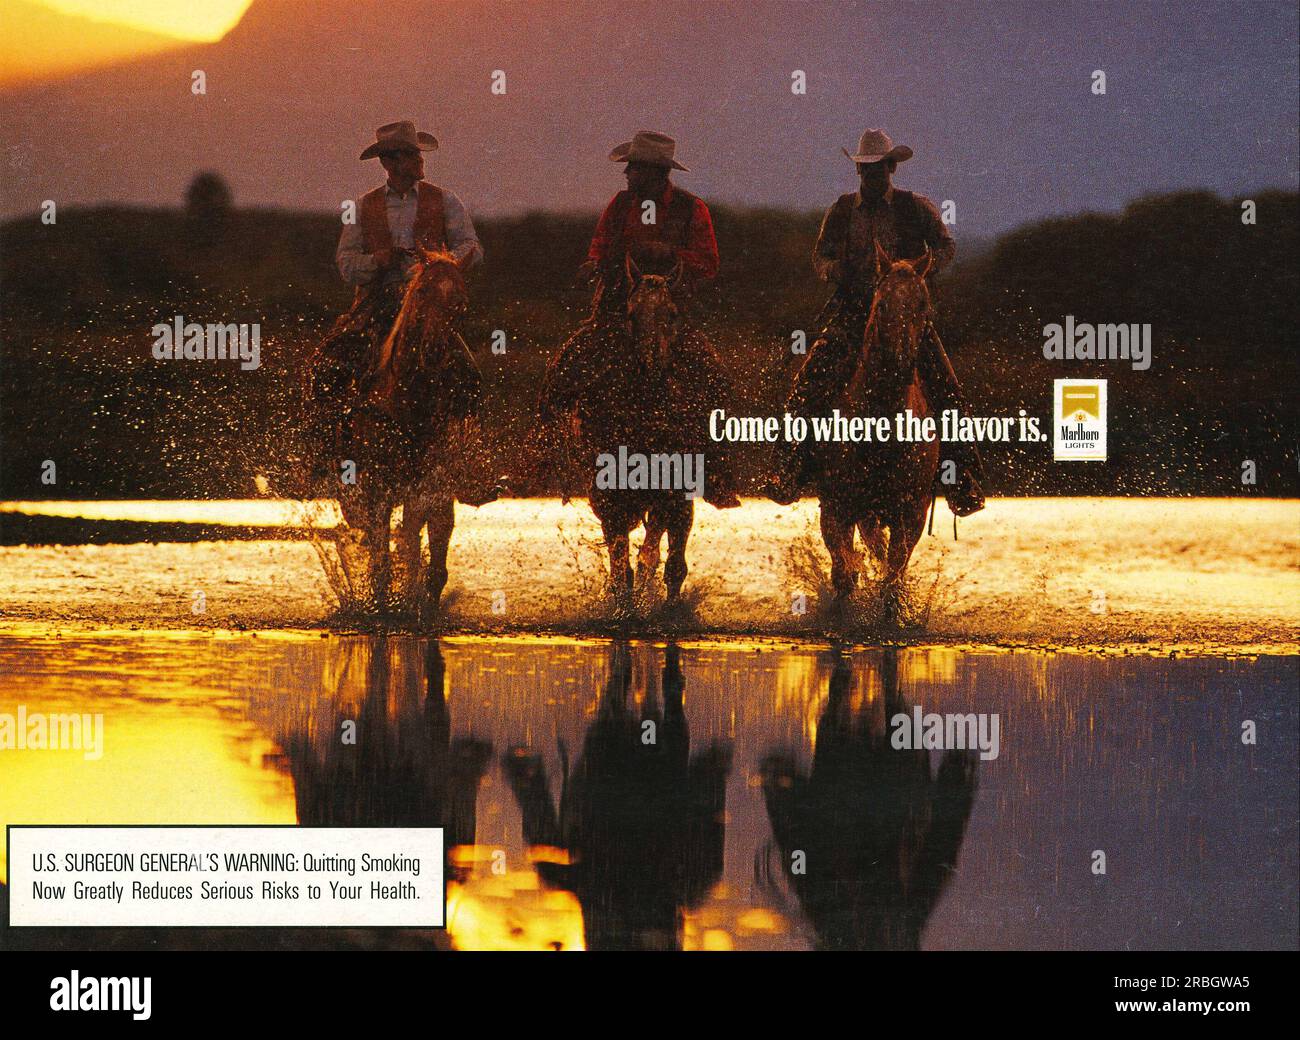 Marlboro Lights cigarettes advert advert in a magazine 2001. Come to where the flavor is Marlboro campaign Stock Photo